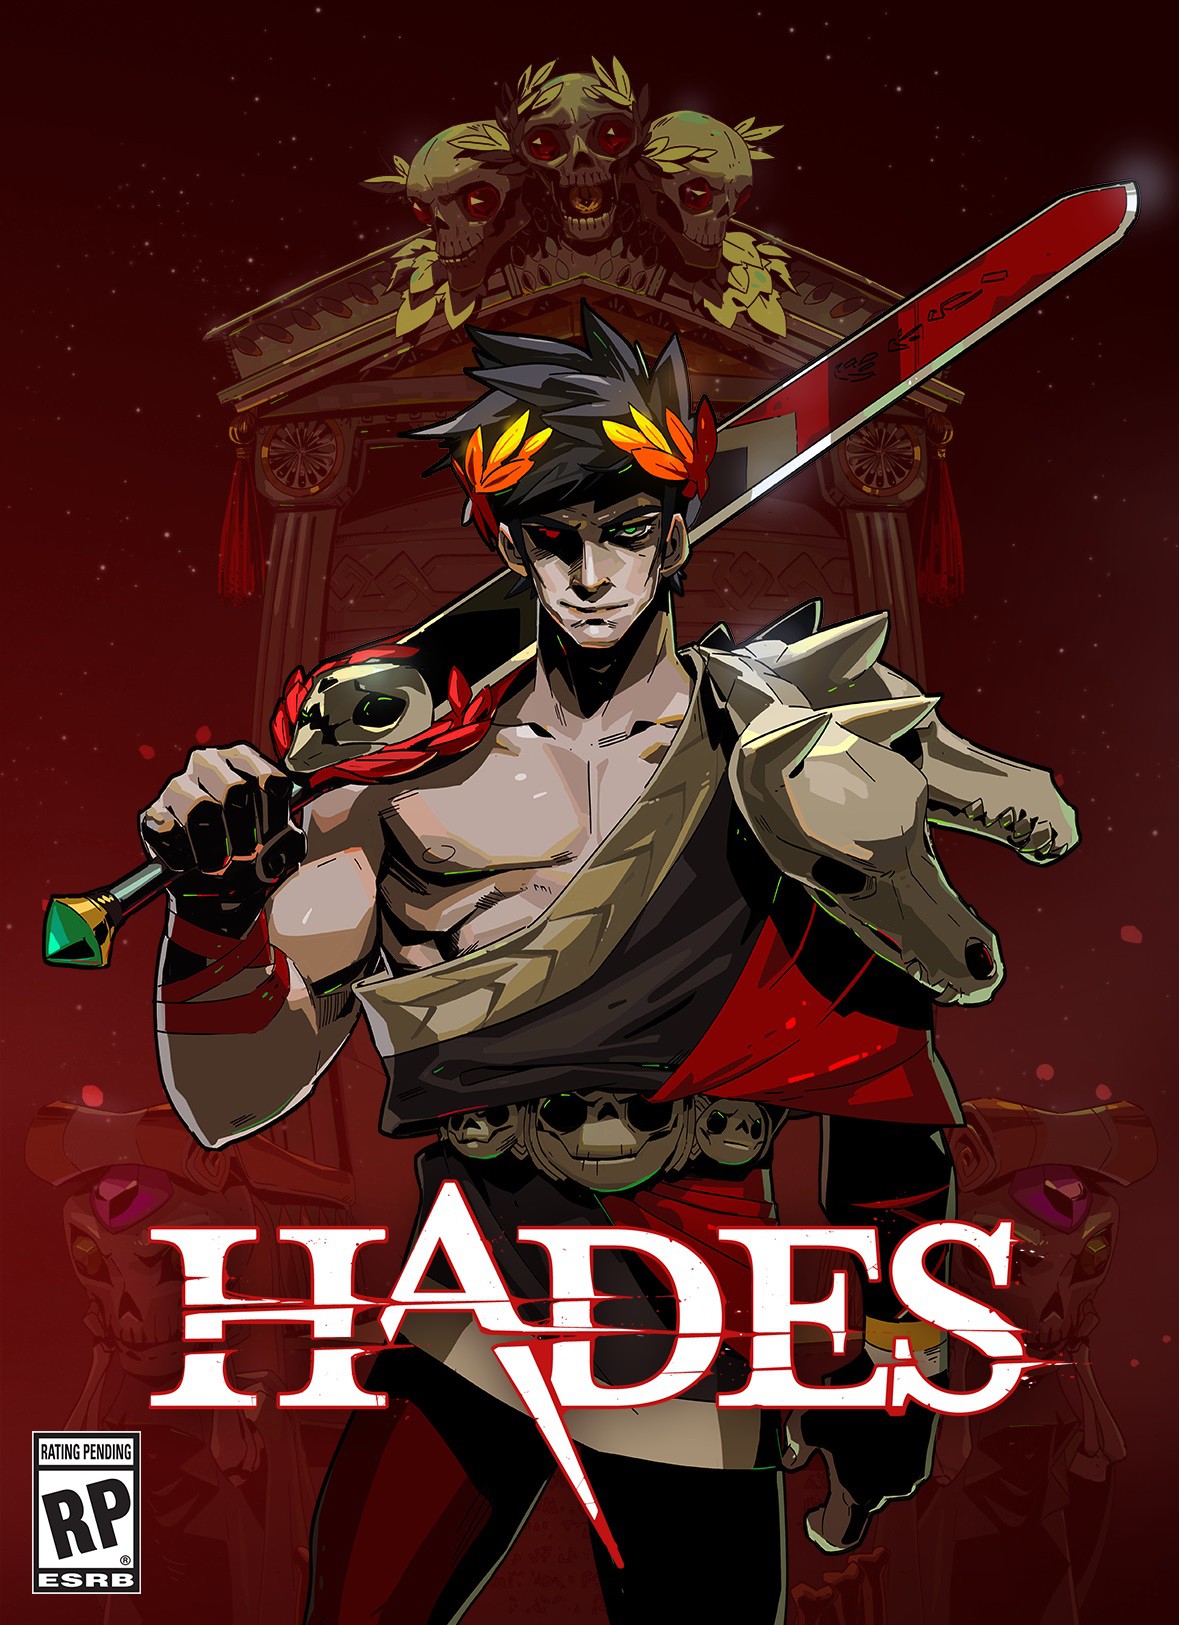 hades orpheus game